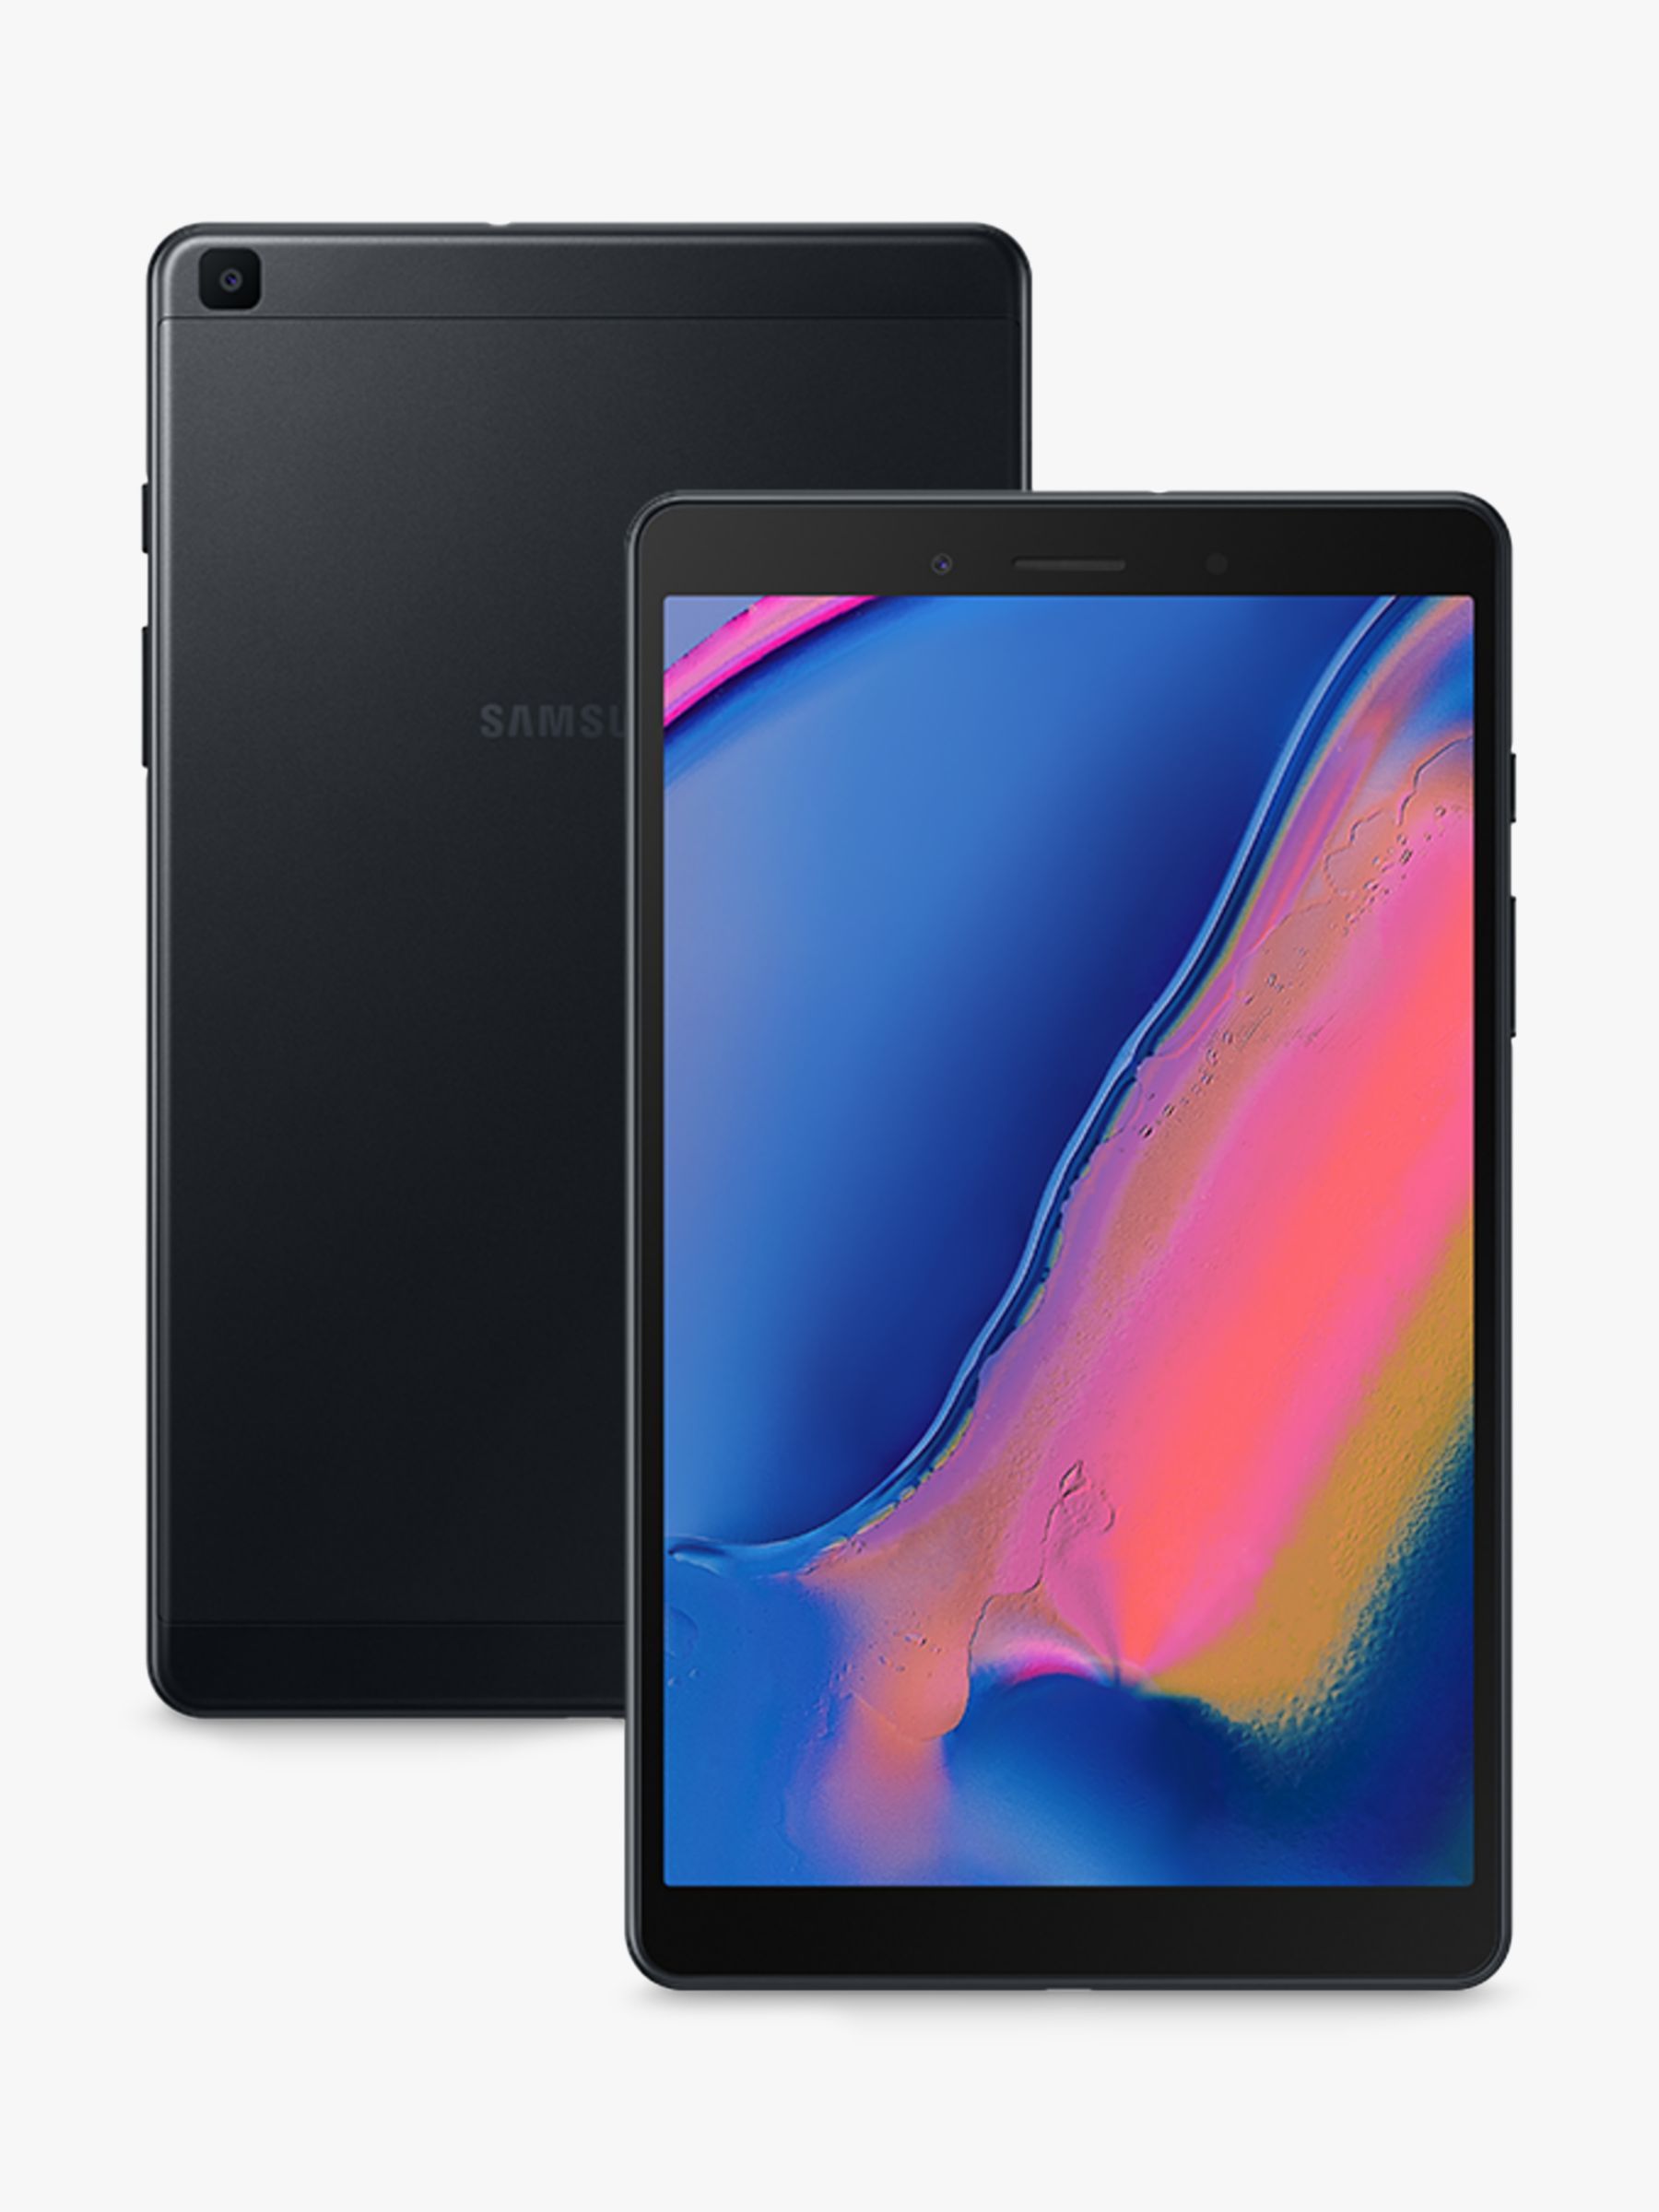 The Samsung A 8.0 tablet.